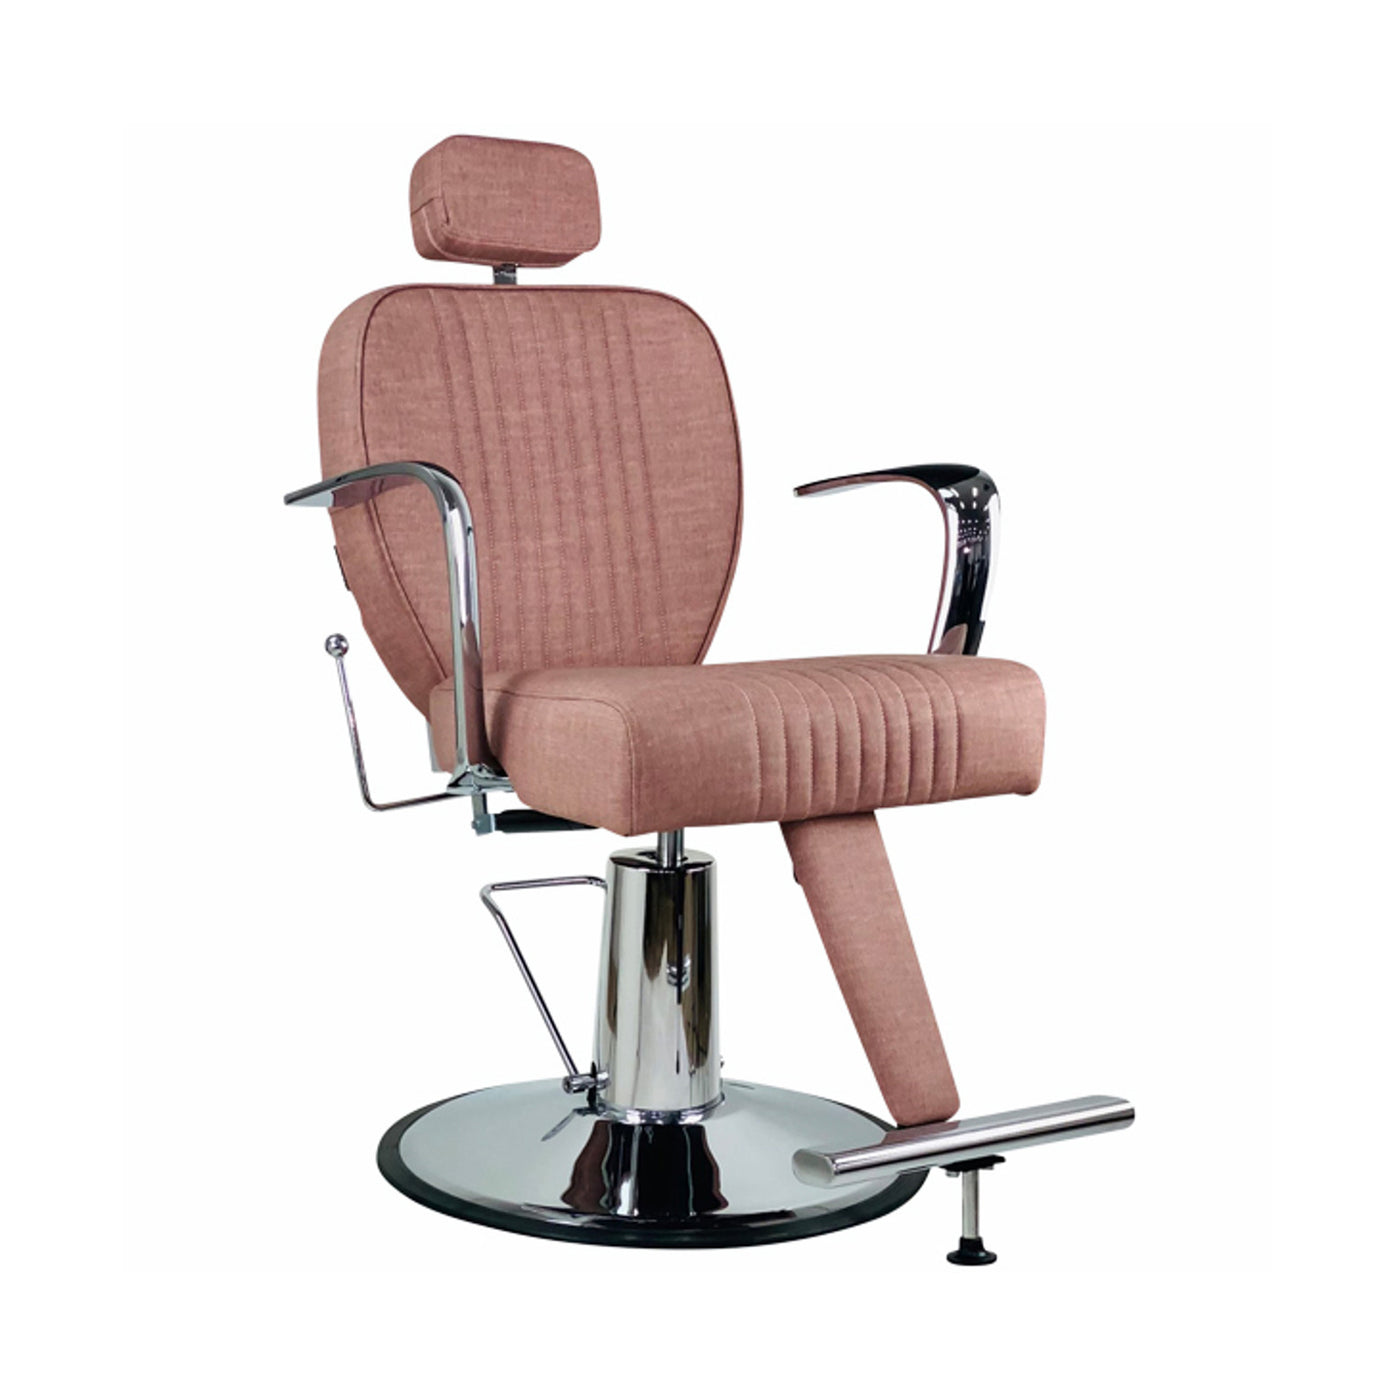 Joiken Titan Reclining Brow & Styling Chair - Dusty Pink side